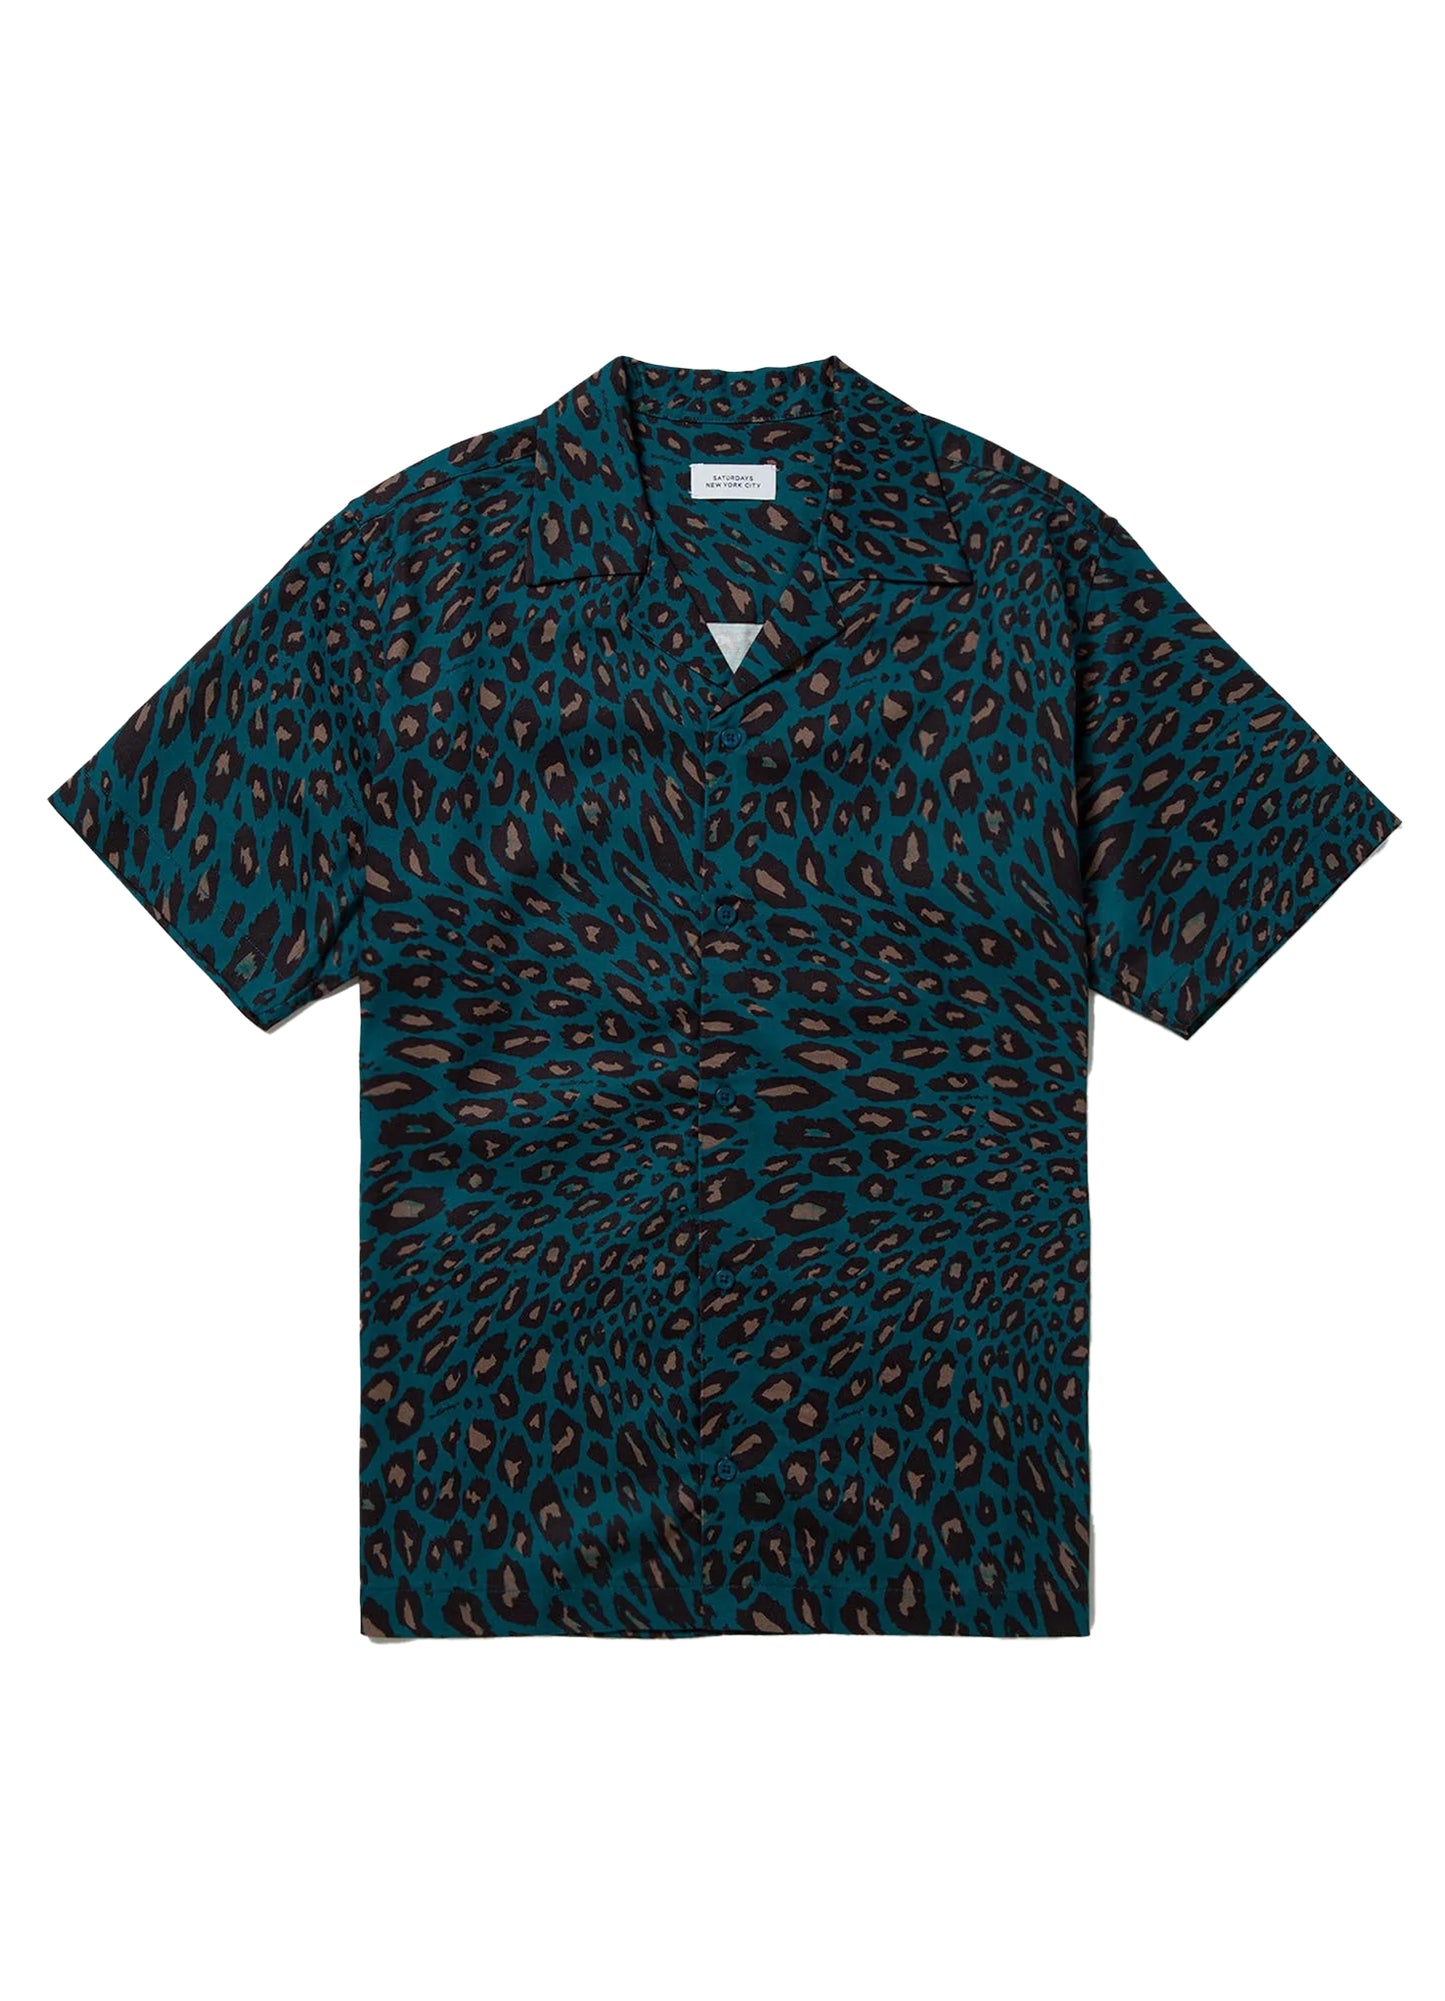 Canty Sound Leopard Short Sleeve Shirt [BBG63100]